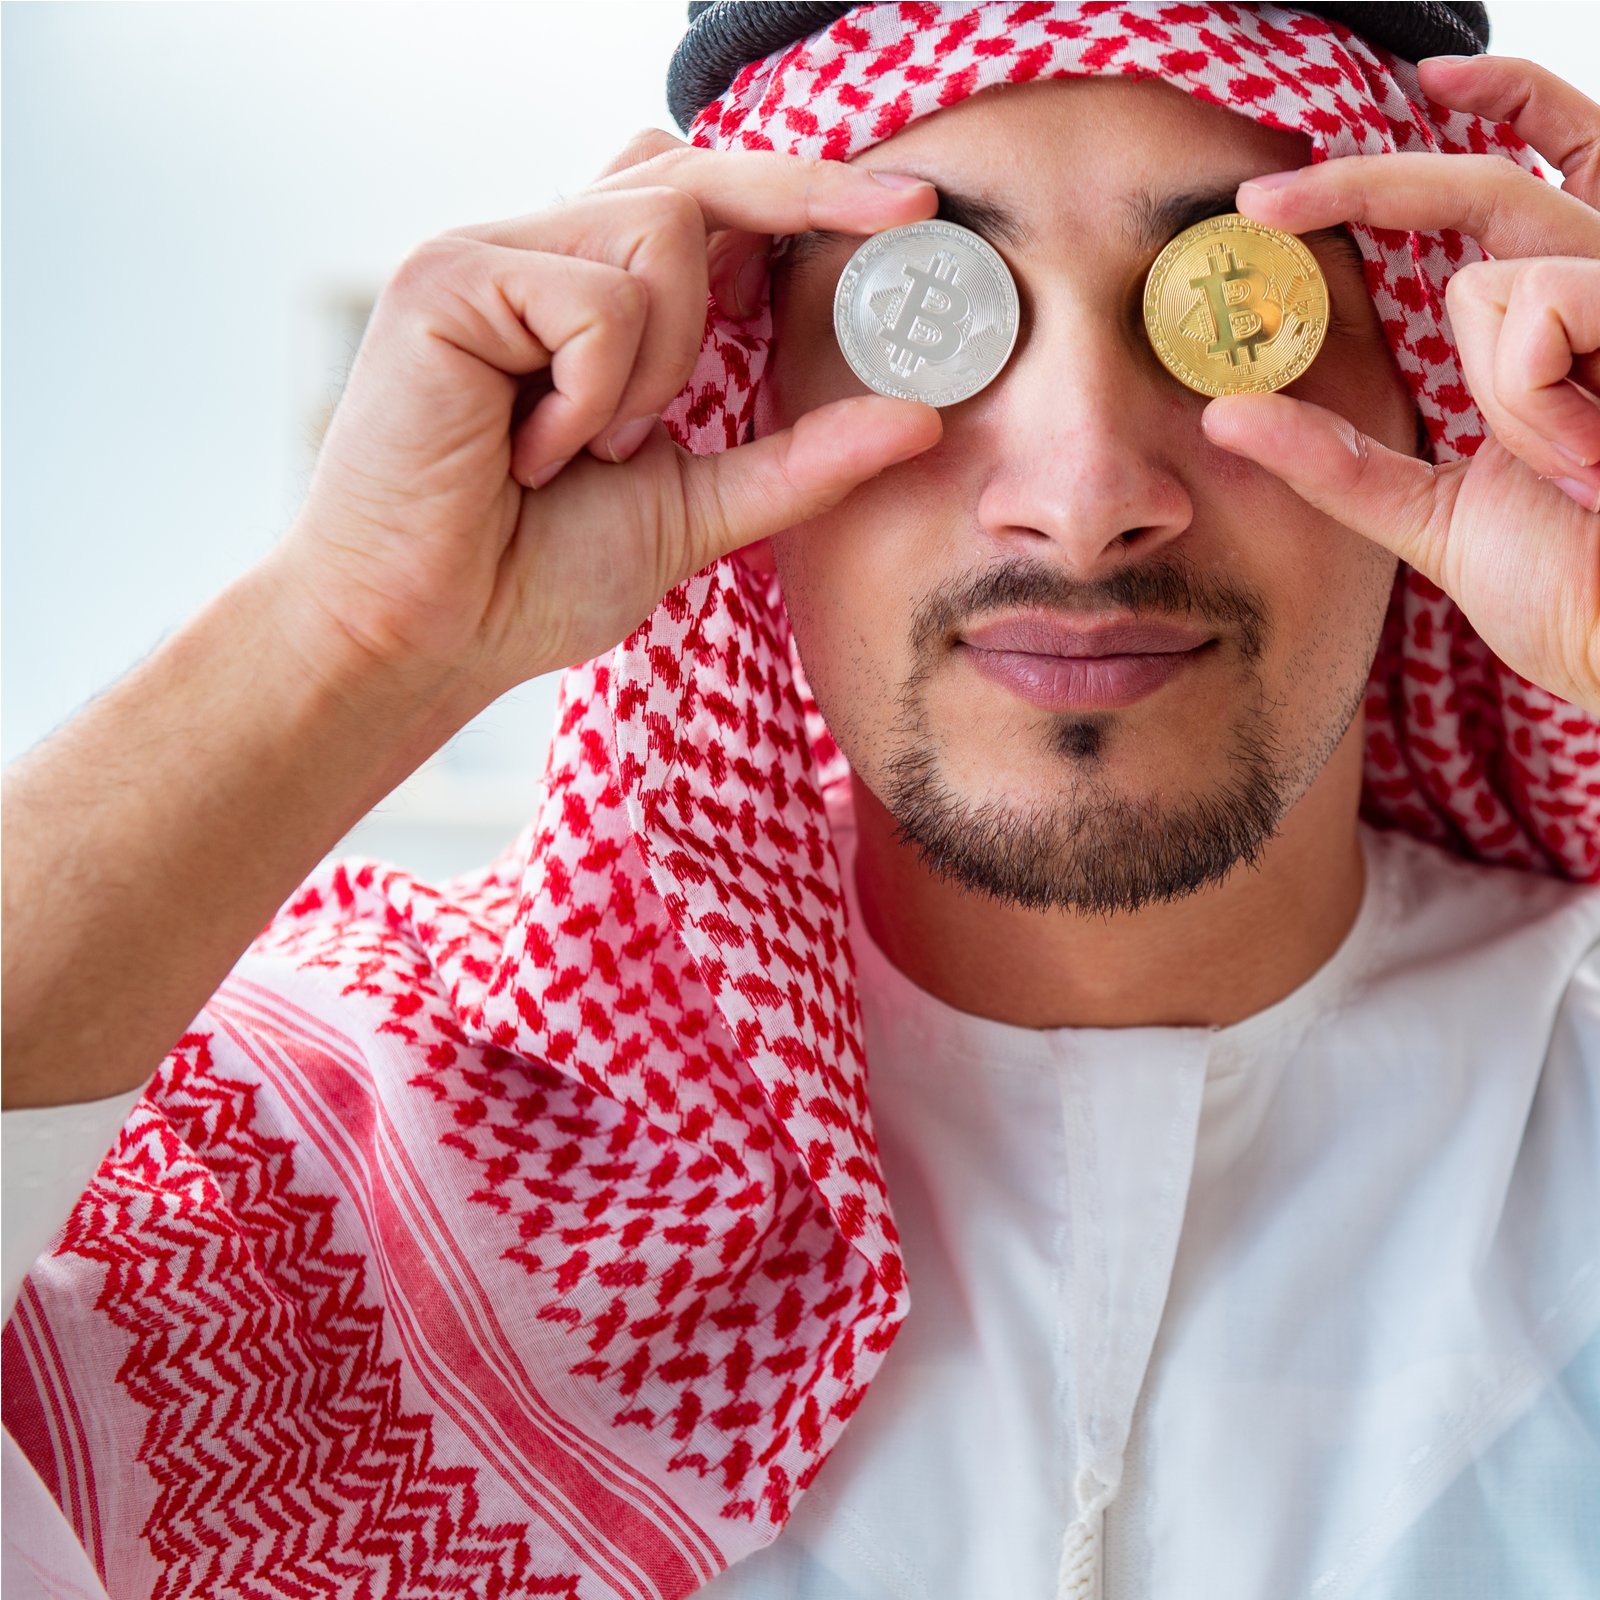 This Week in Bitcoin: Islamic Exchange, Self-Regulation, Social Trading